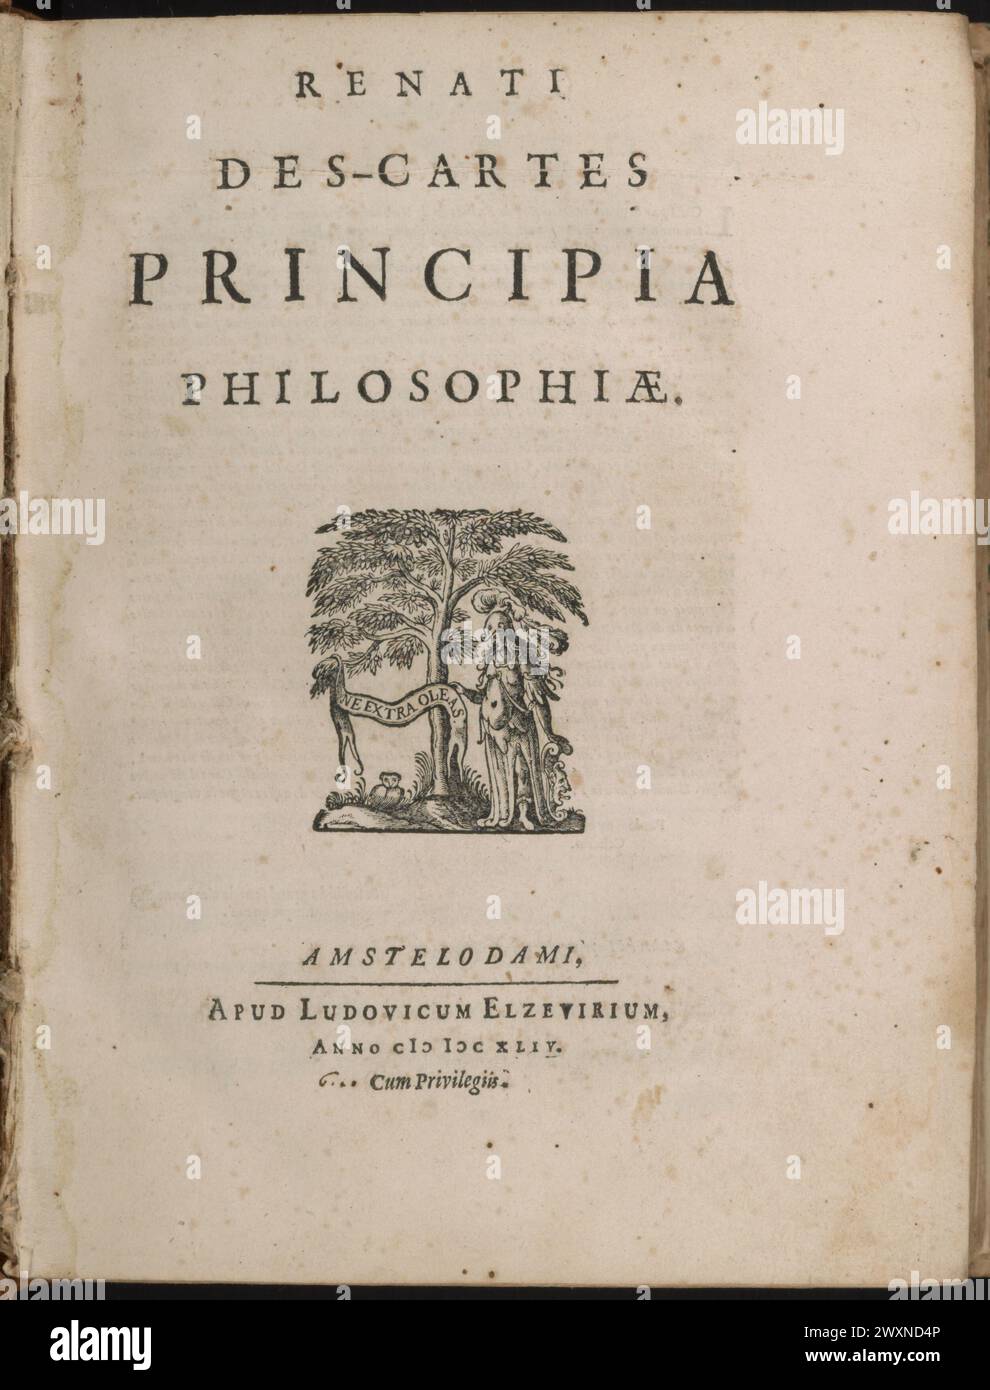 Vintage Title Page for 'Principia Philosophiae' by philospher René Descartes (Principles of Philosophy) Stock Photo